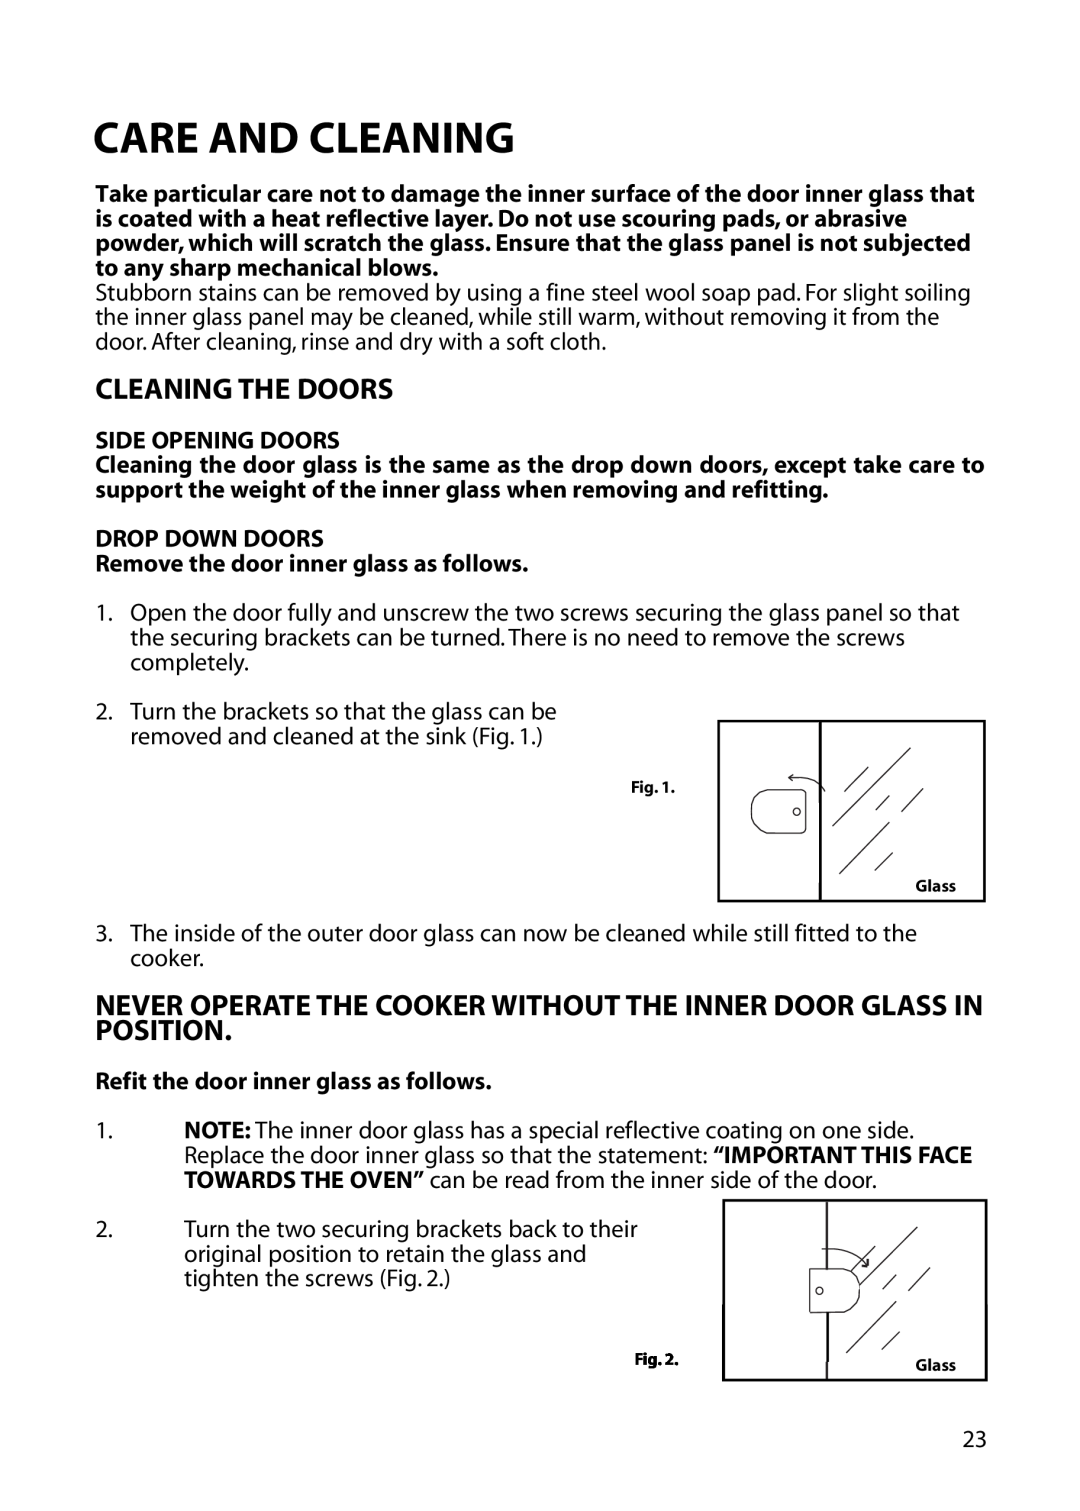 Hotpoint EG72, EG53 Cleaning The Doors, Side Opening Doors, Drop Down Doors, Remove the door inner glass as follows 